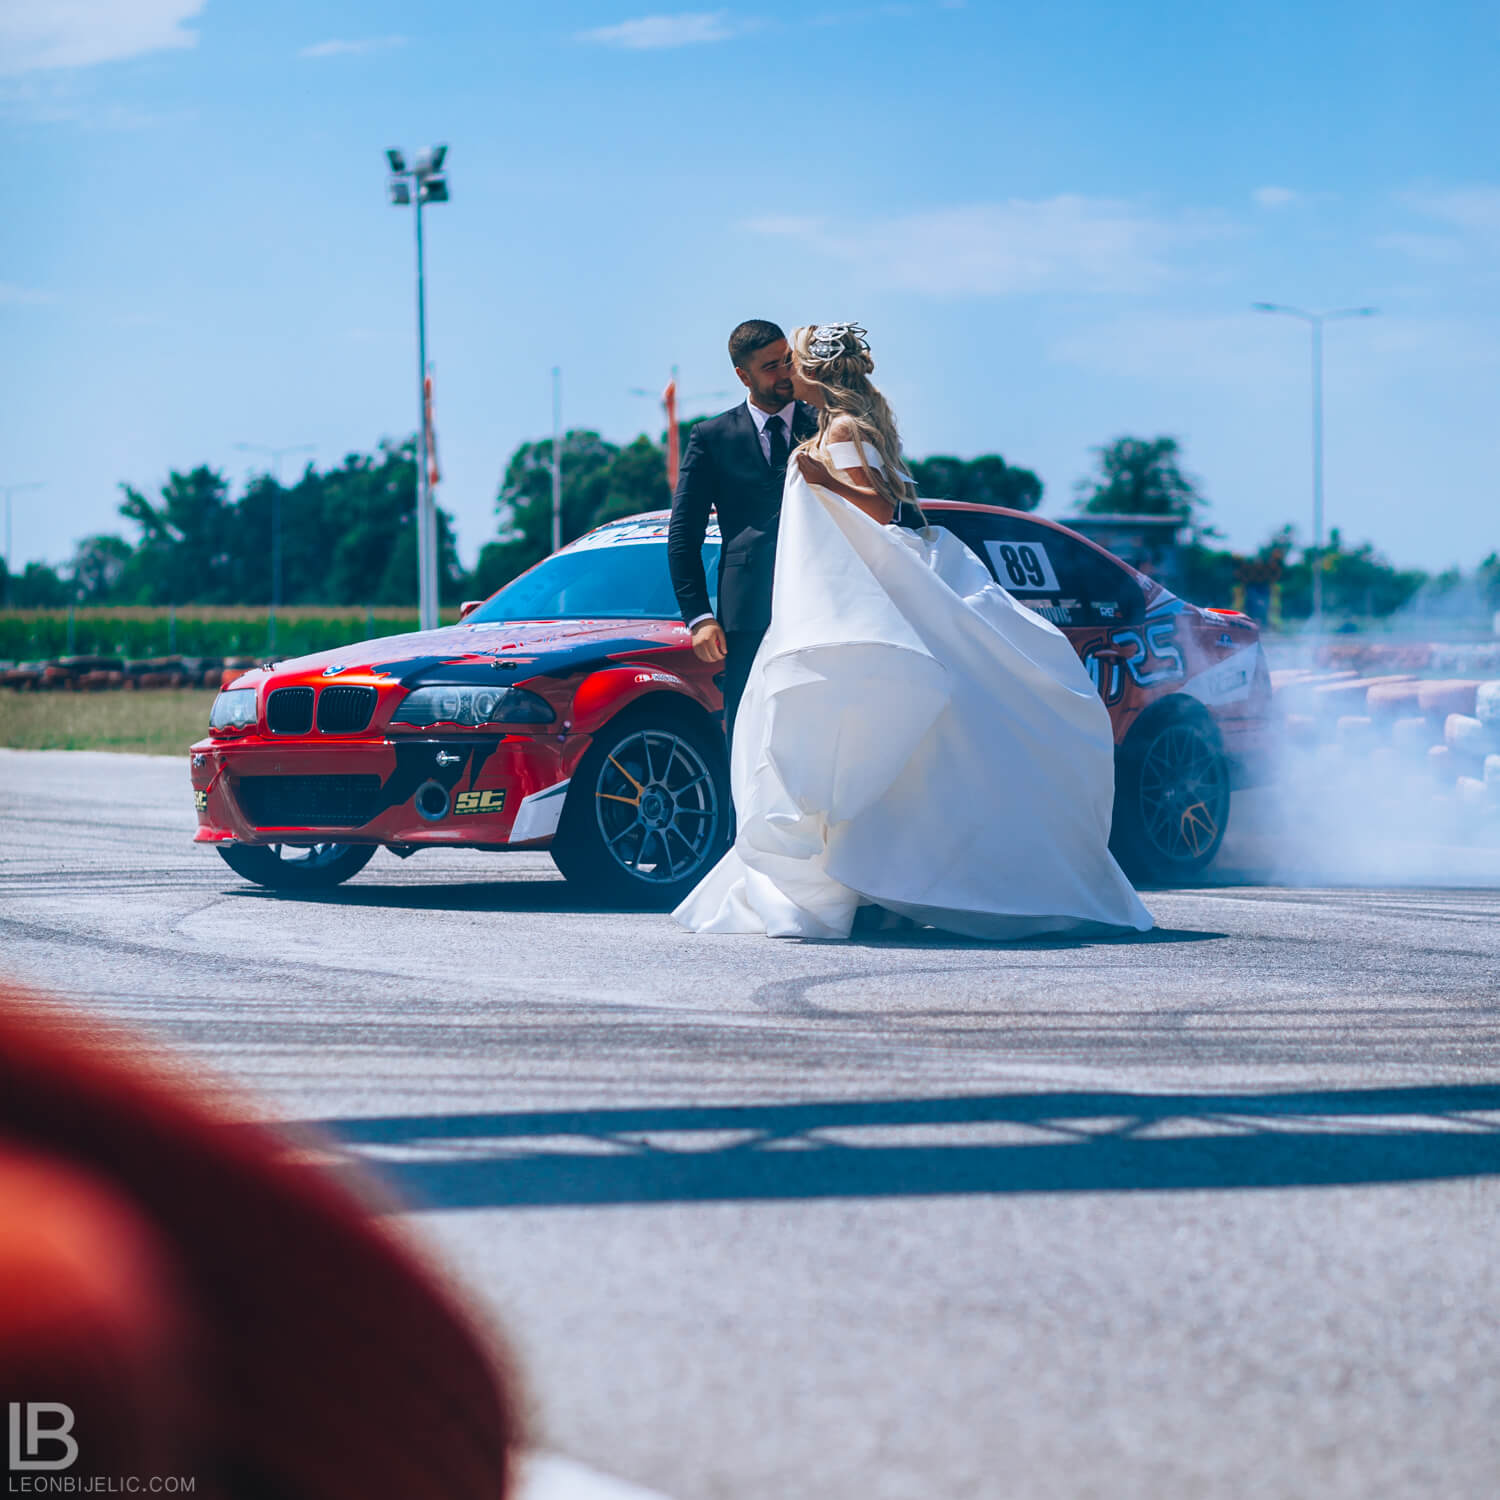 WEDDING BELGRADE - TIJANA I MARKO - LEON BIJELIC PHOTOGRAPHY PHOTOGRAPHER - SERBIA - SRBIJA - BEOGRAD - AUTOKOMERC KARTING CENTAR